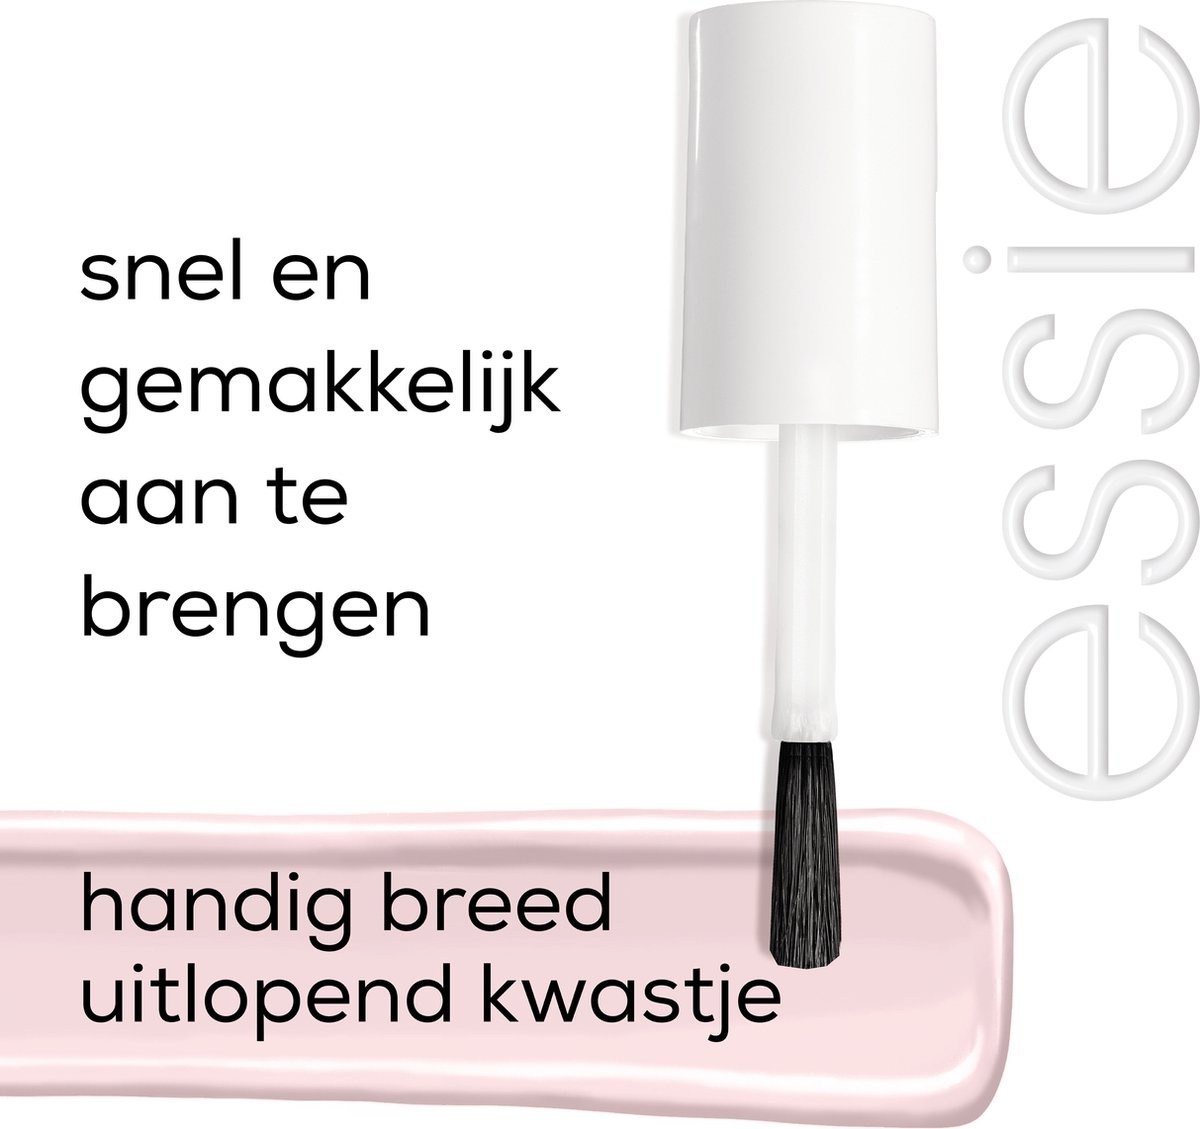 Essie Mademoiselle 13 - Pink Nail Polish